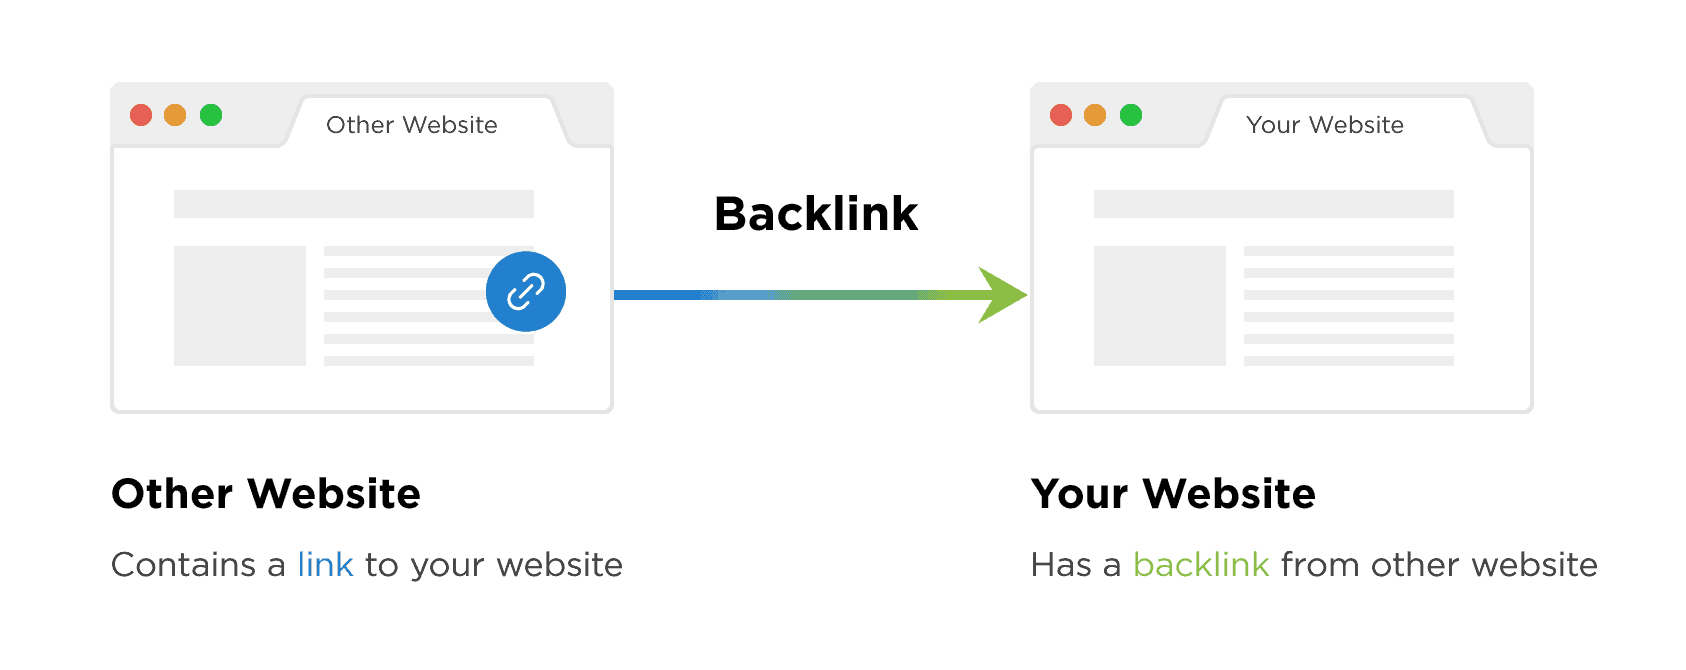 backlinks in seo - linking between sites